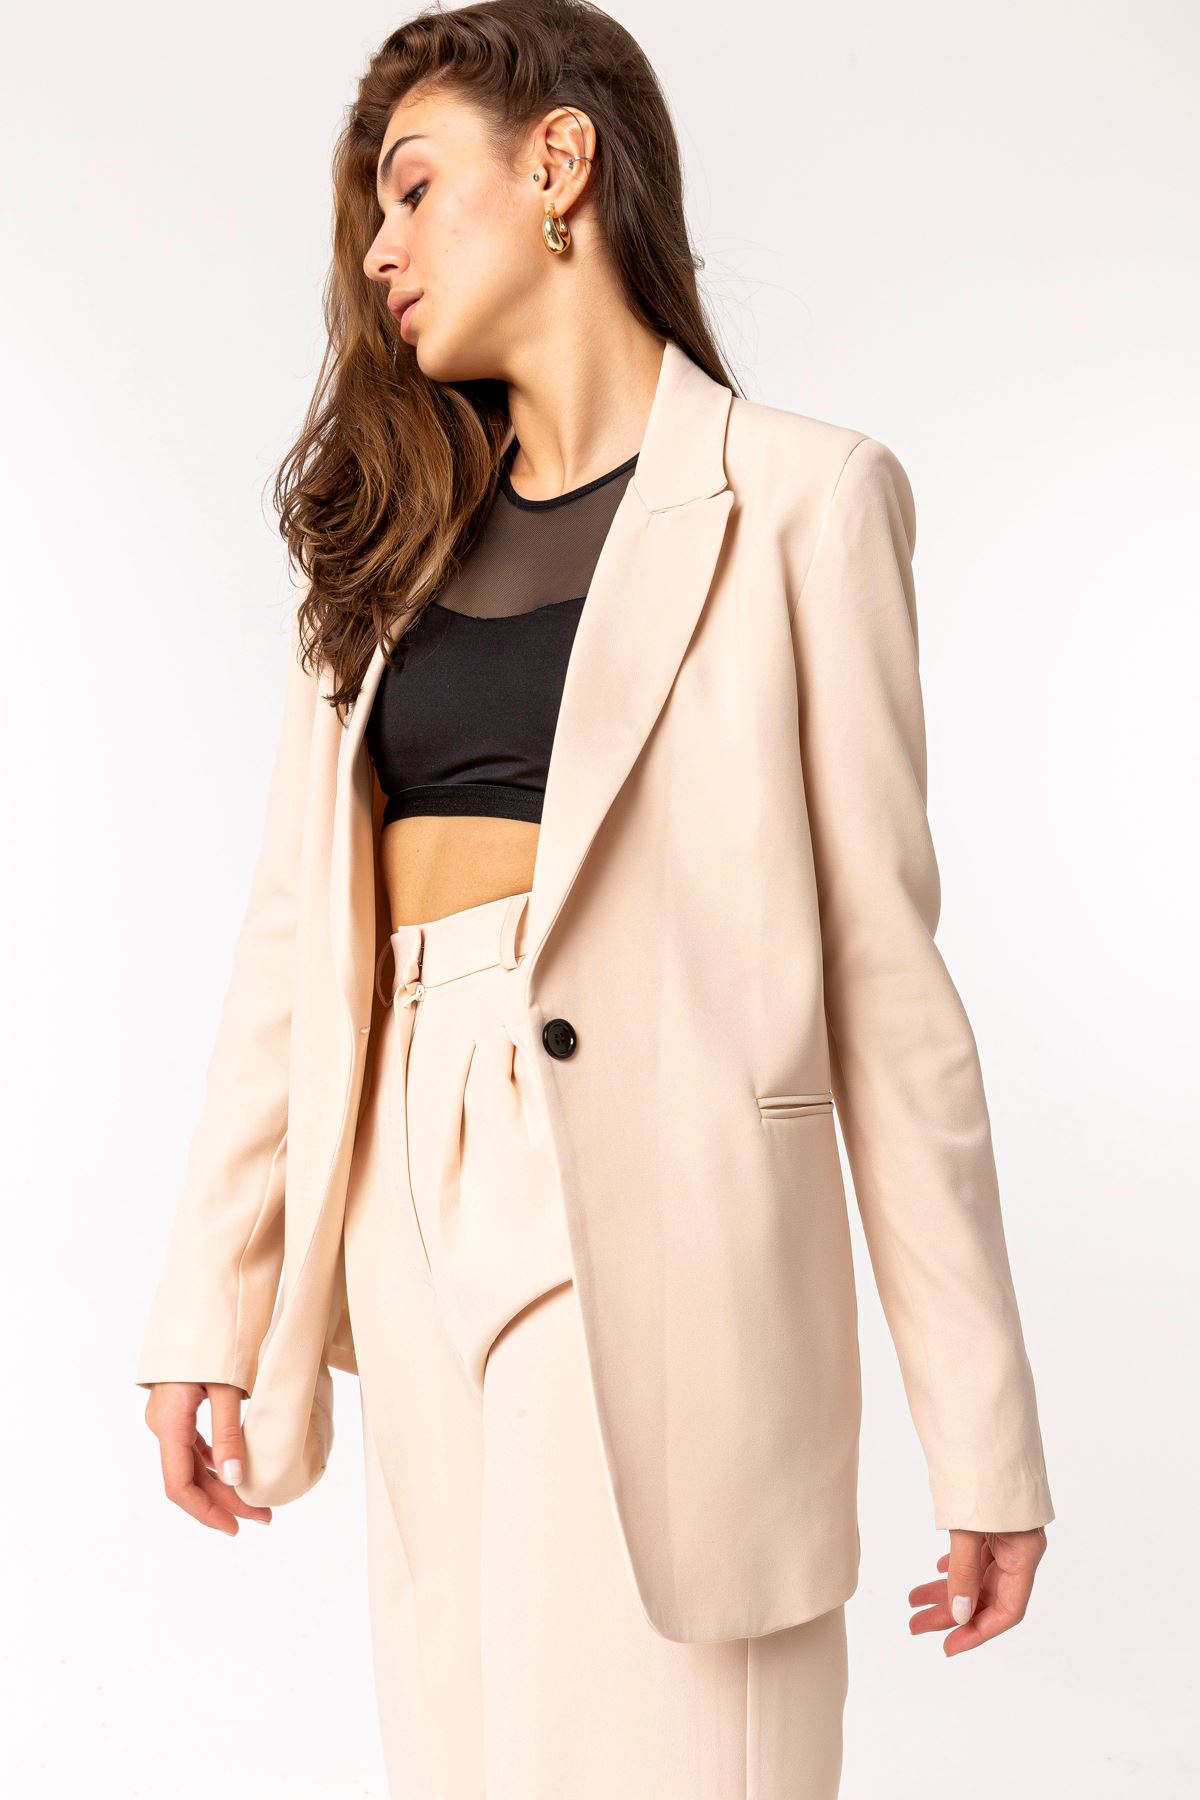 Atlas Fabric Revere Collar Below Hip Classical Single Button Women Jacket - Beige 